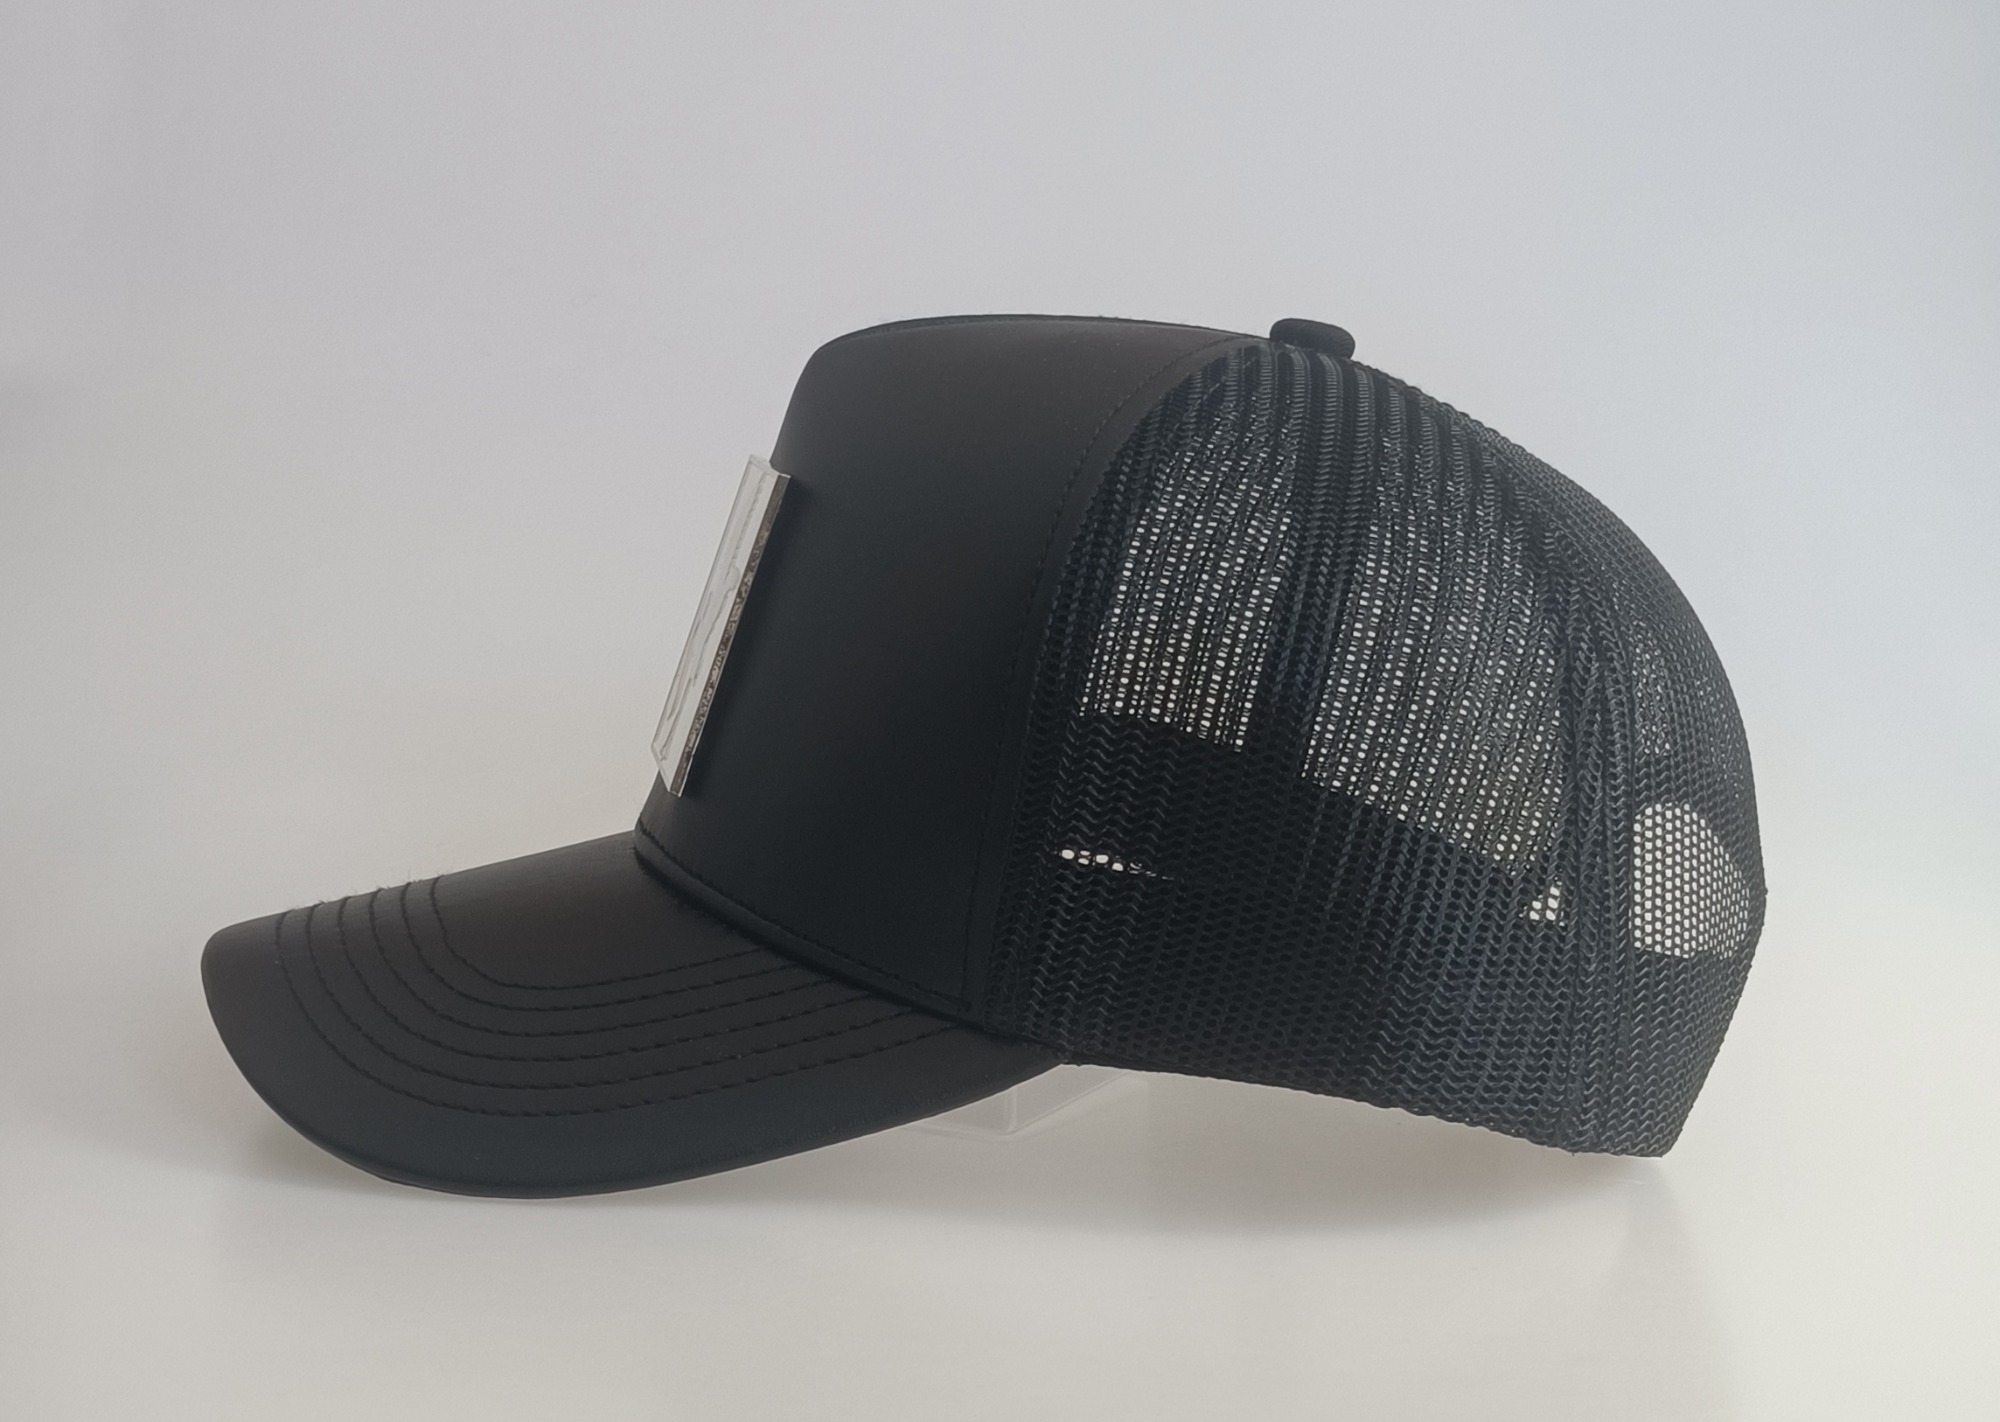 Custom black leather mesh hat metal patch logo high quality trucker cap hat